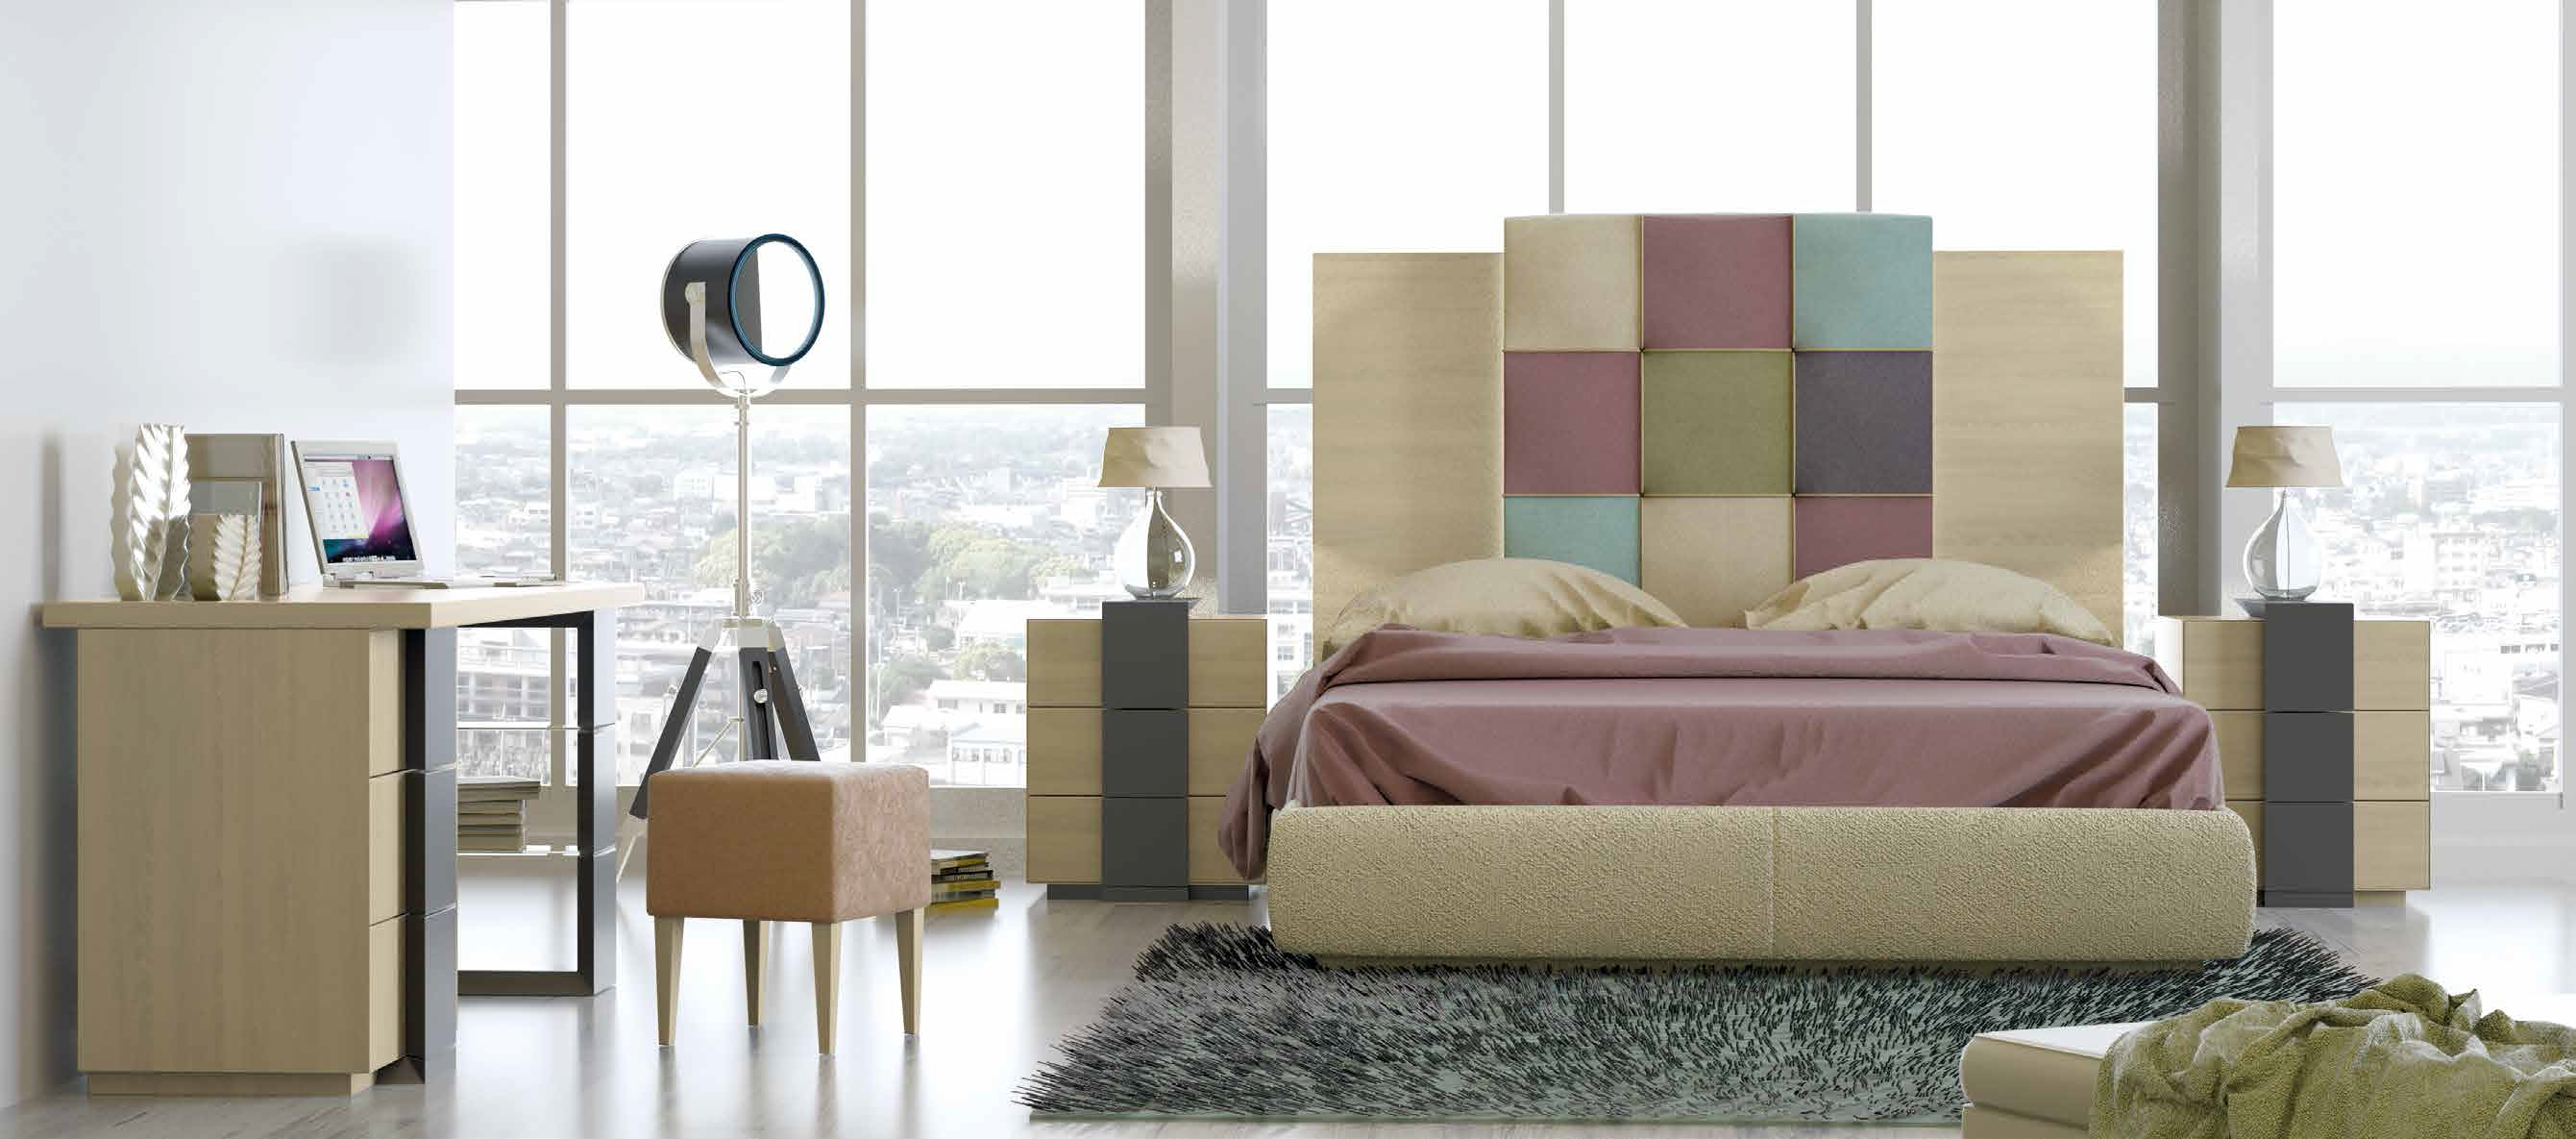 Bedroom Furniture Beds with storage DOR 12